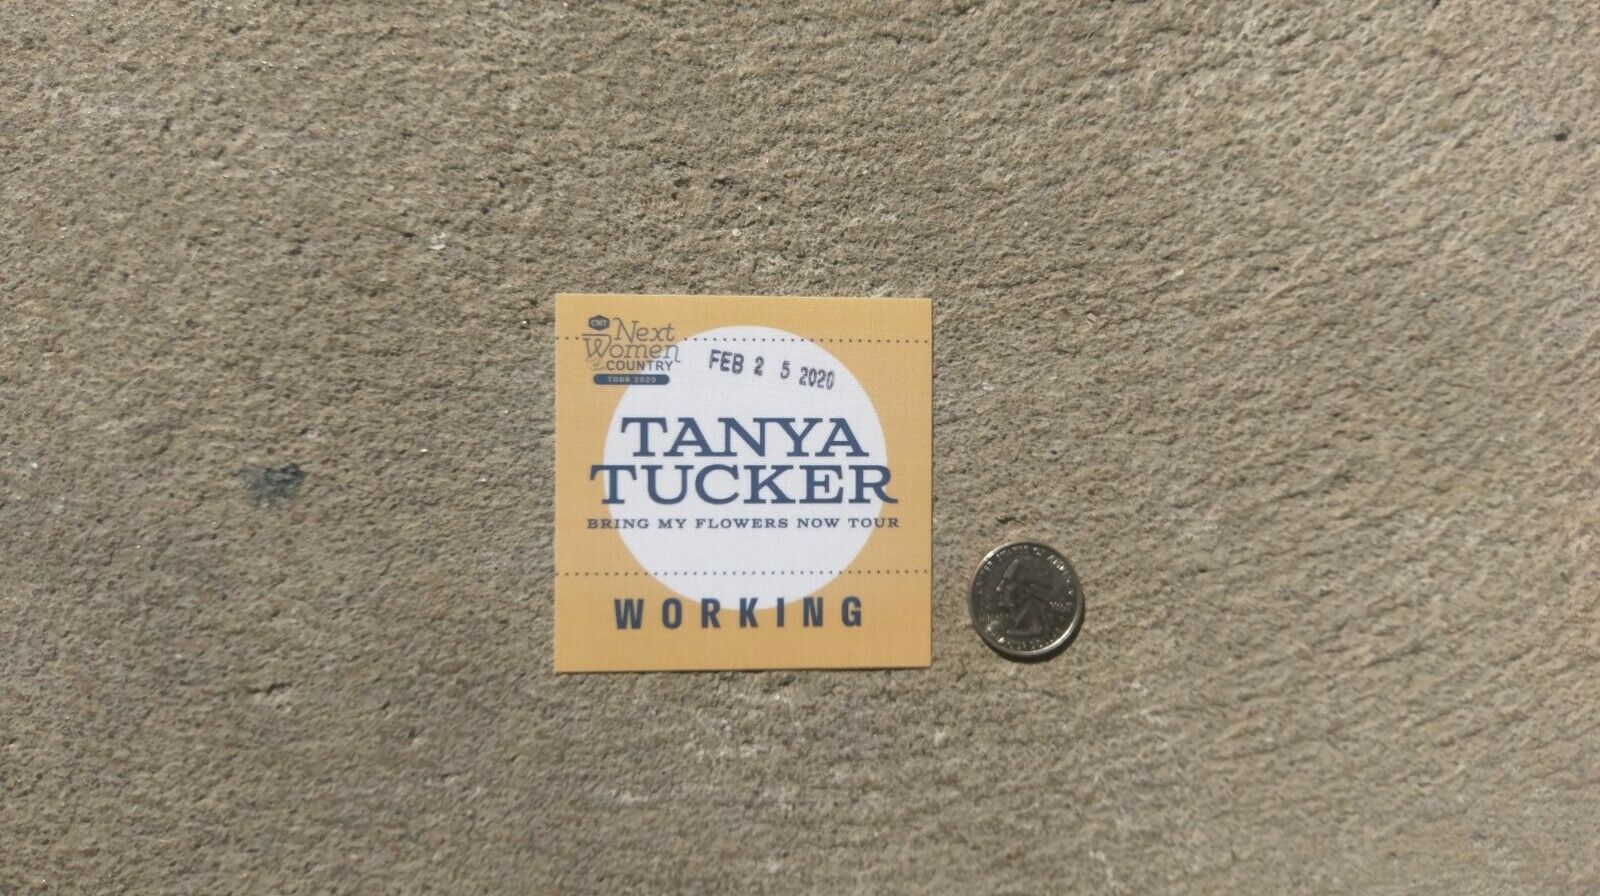 Tanya Tucker - 2020 Tour 'working' (crew) Backstage Pass Satin - Rare!!!